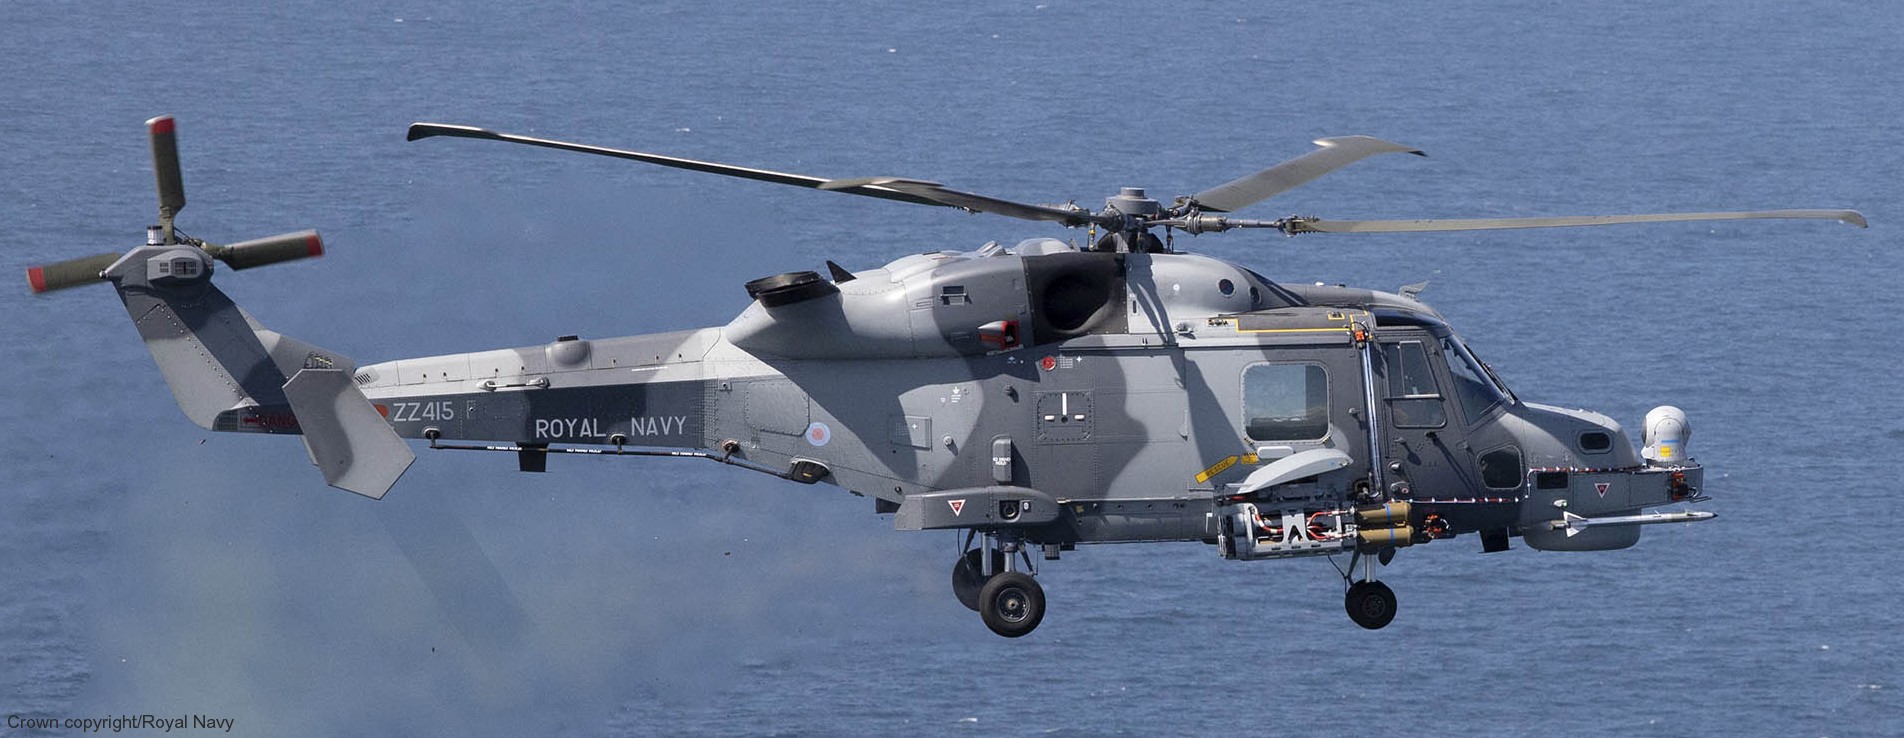 martlet lmm lightweight multirole missile royal navy thales wildcat hma2 helicopter 09